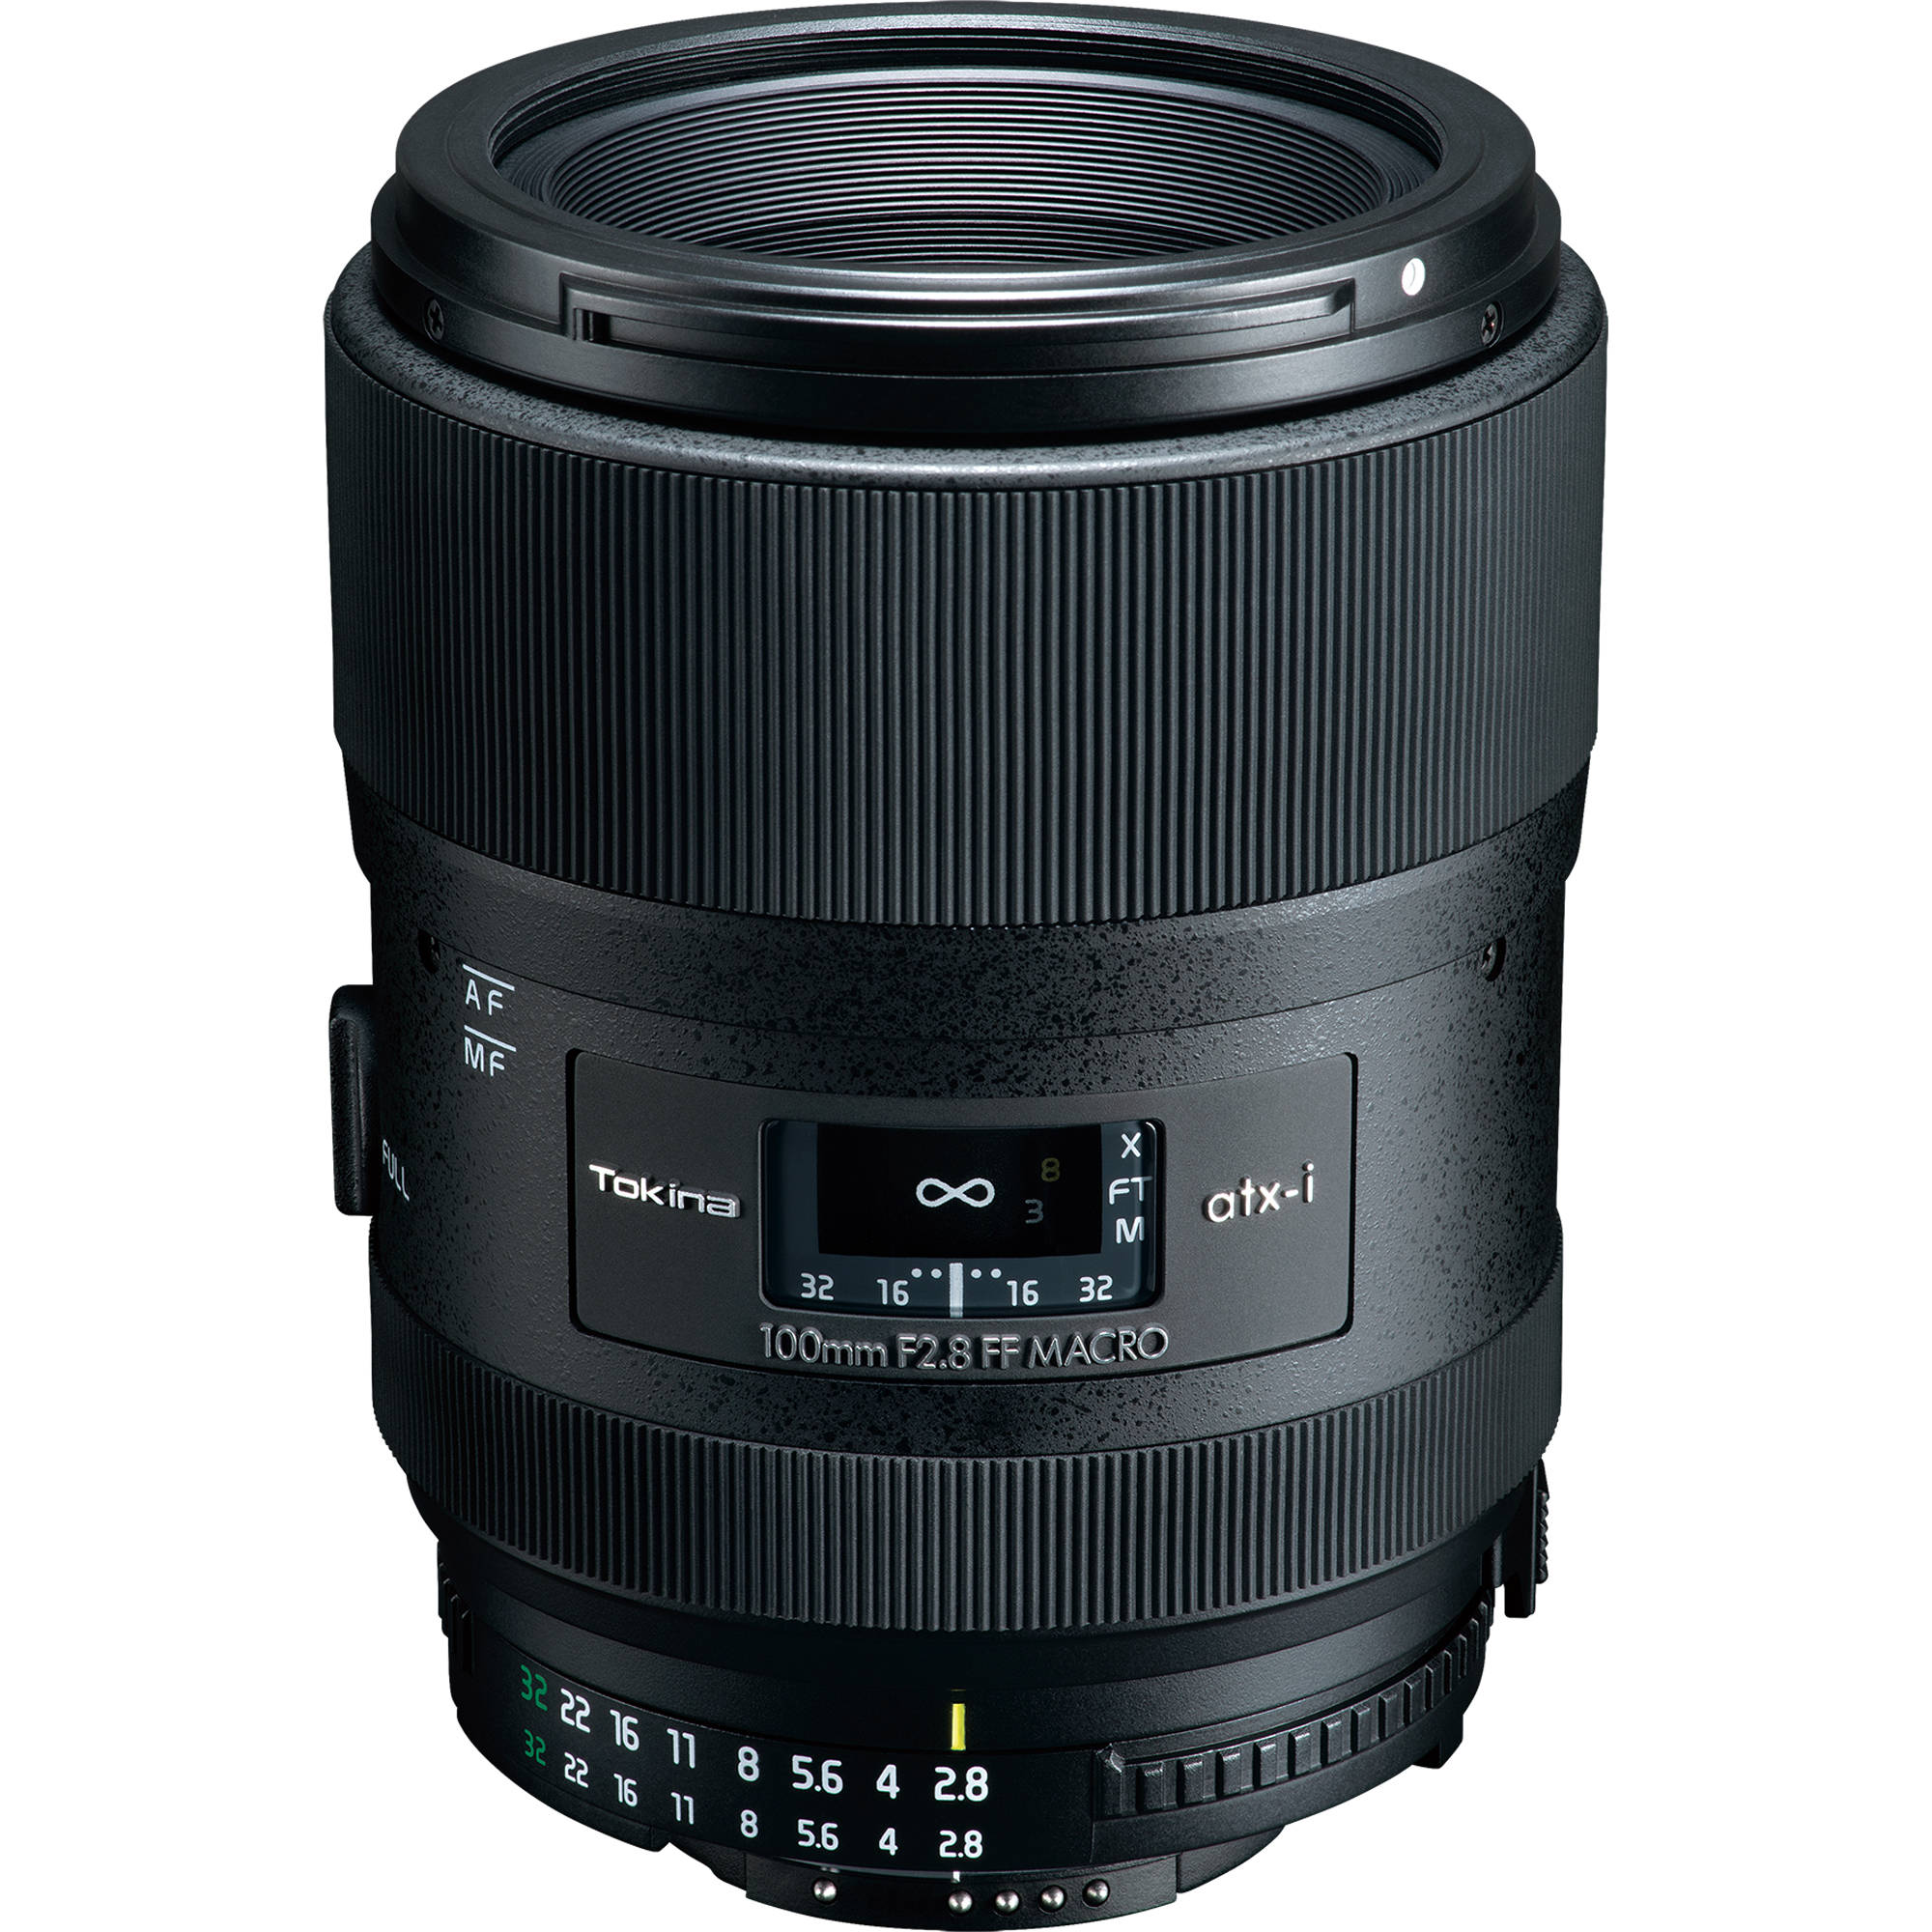 Lente Tokina ATX-i 100mm F2.8 FF MACRO, Full Frame, para Nikon F